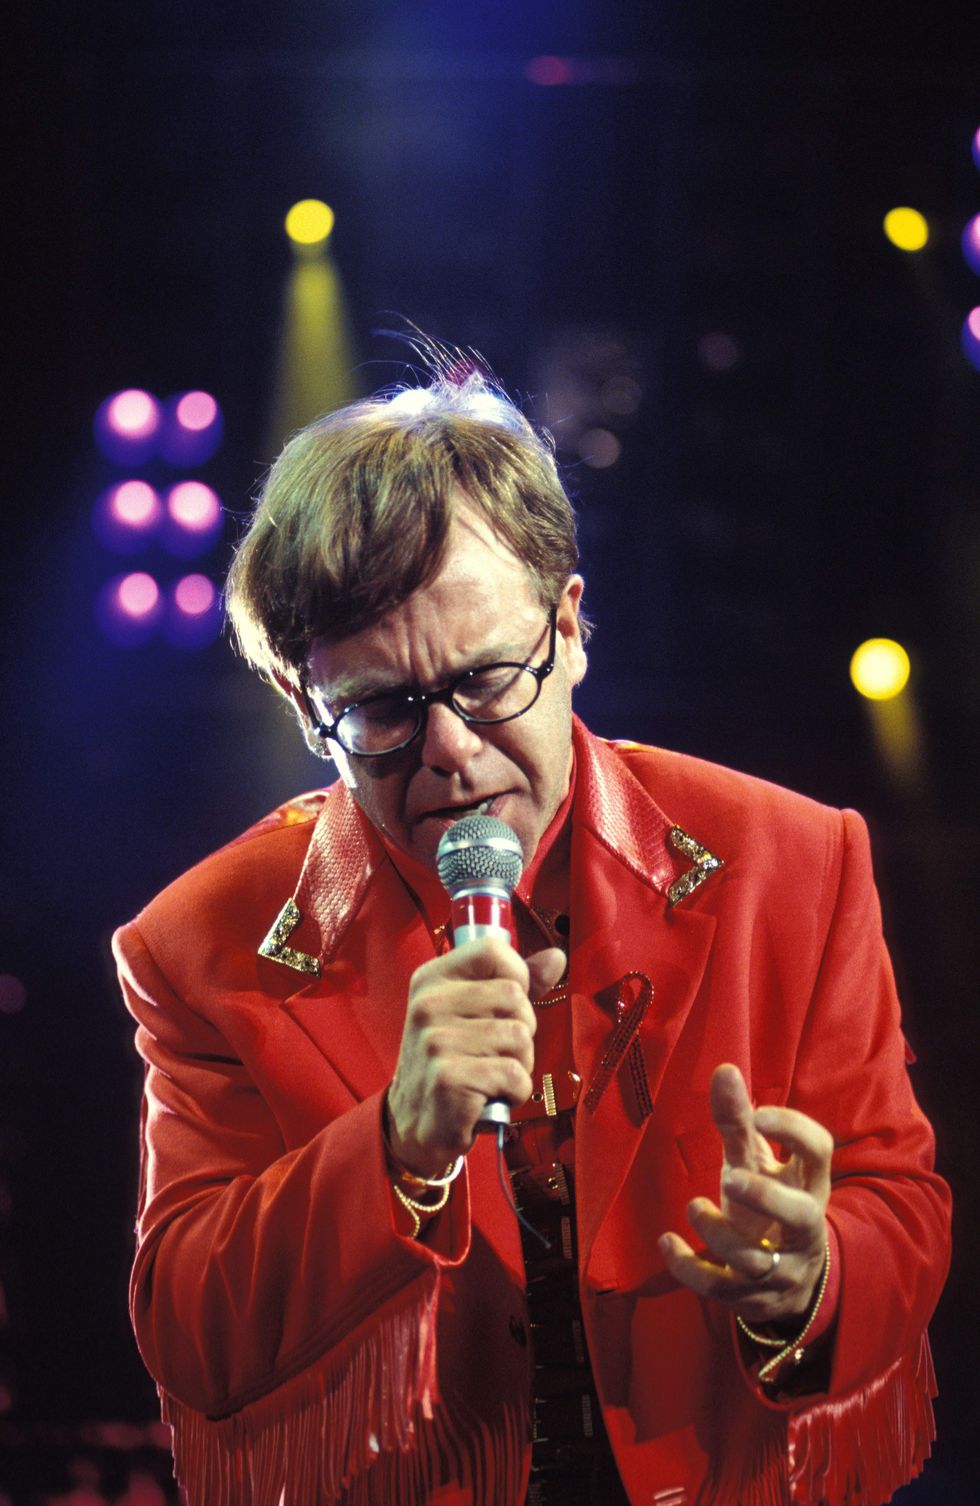 Our Top 5 Favourite Elton John Outfits - Barneys Originals